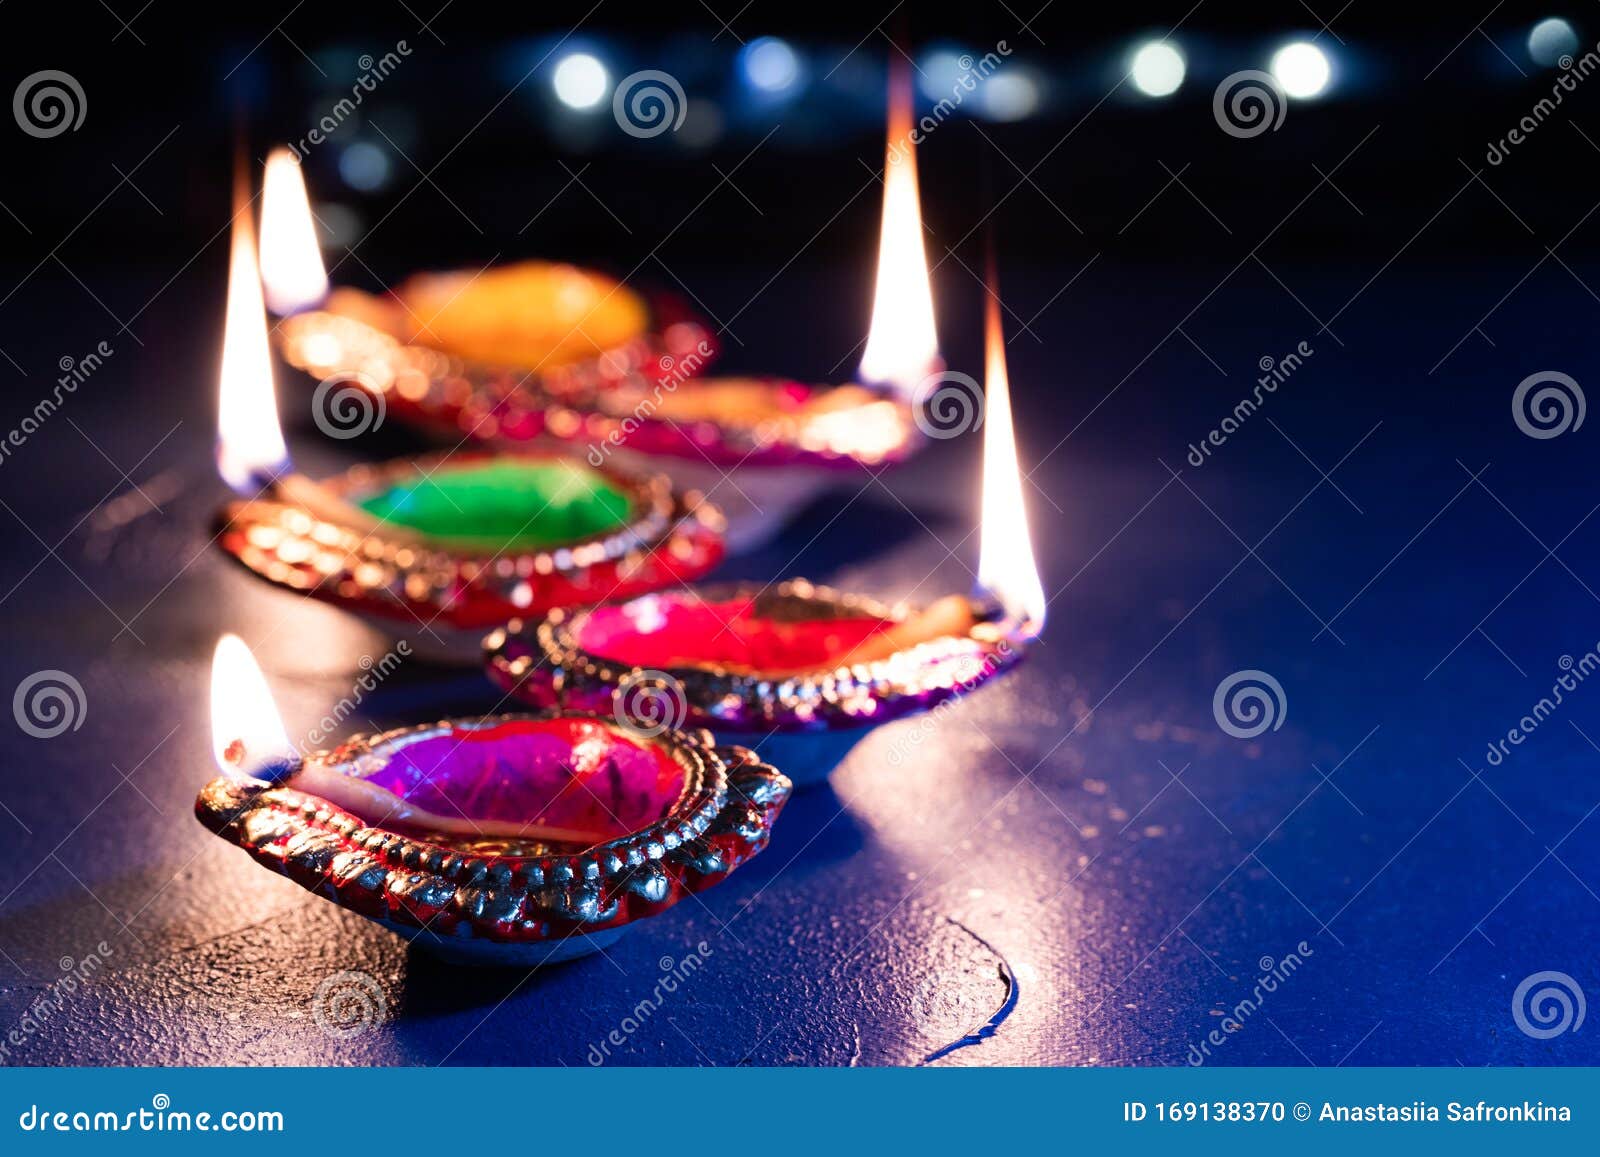 1,896 Diwali Deepak Background Stock Photos - Free & Royalty-Free Stock  Photos from Dreamstime